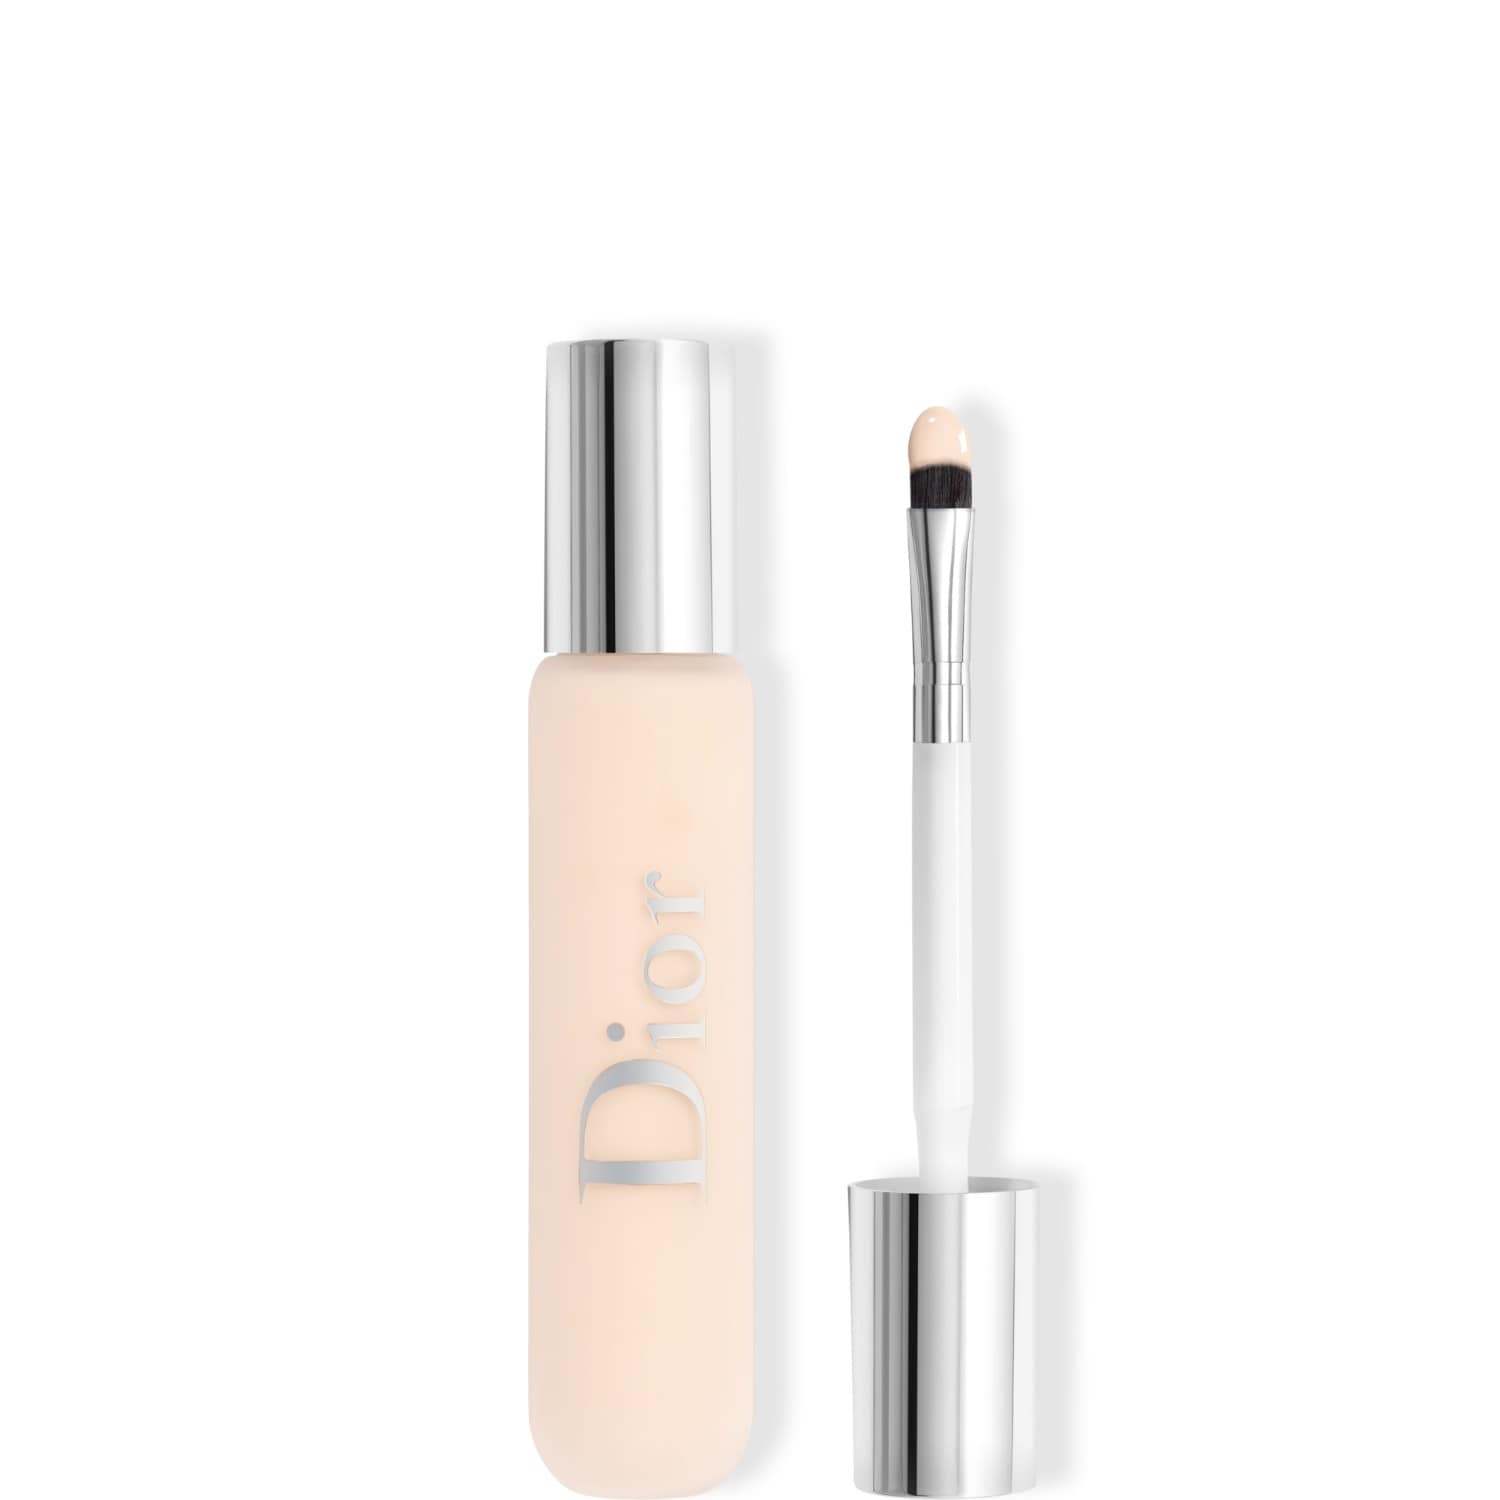 Dior Backstage Dior Backstage Face & Body Flash Perfector Concealer, No. 0CR - Cool Rosy